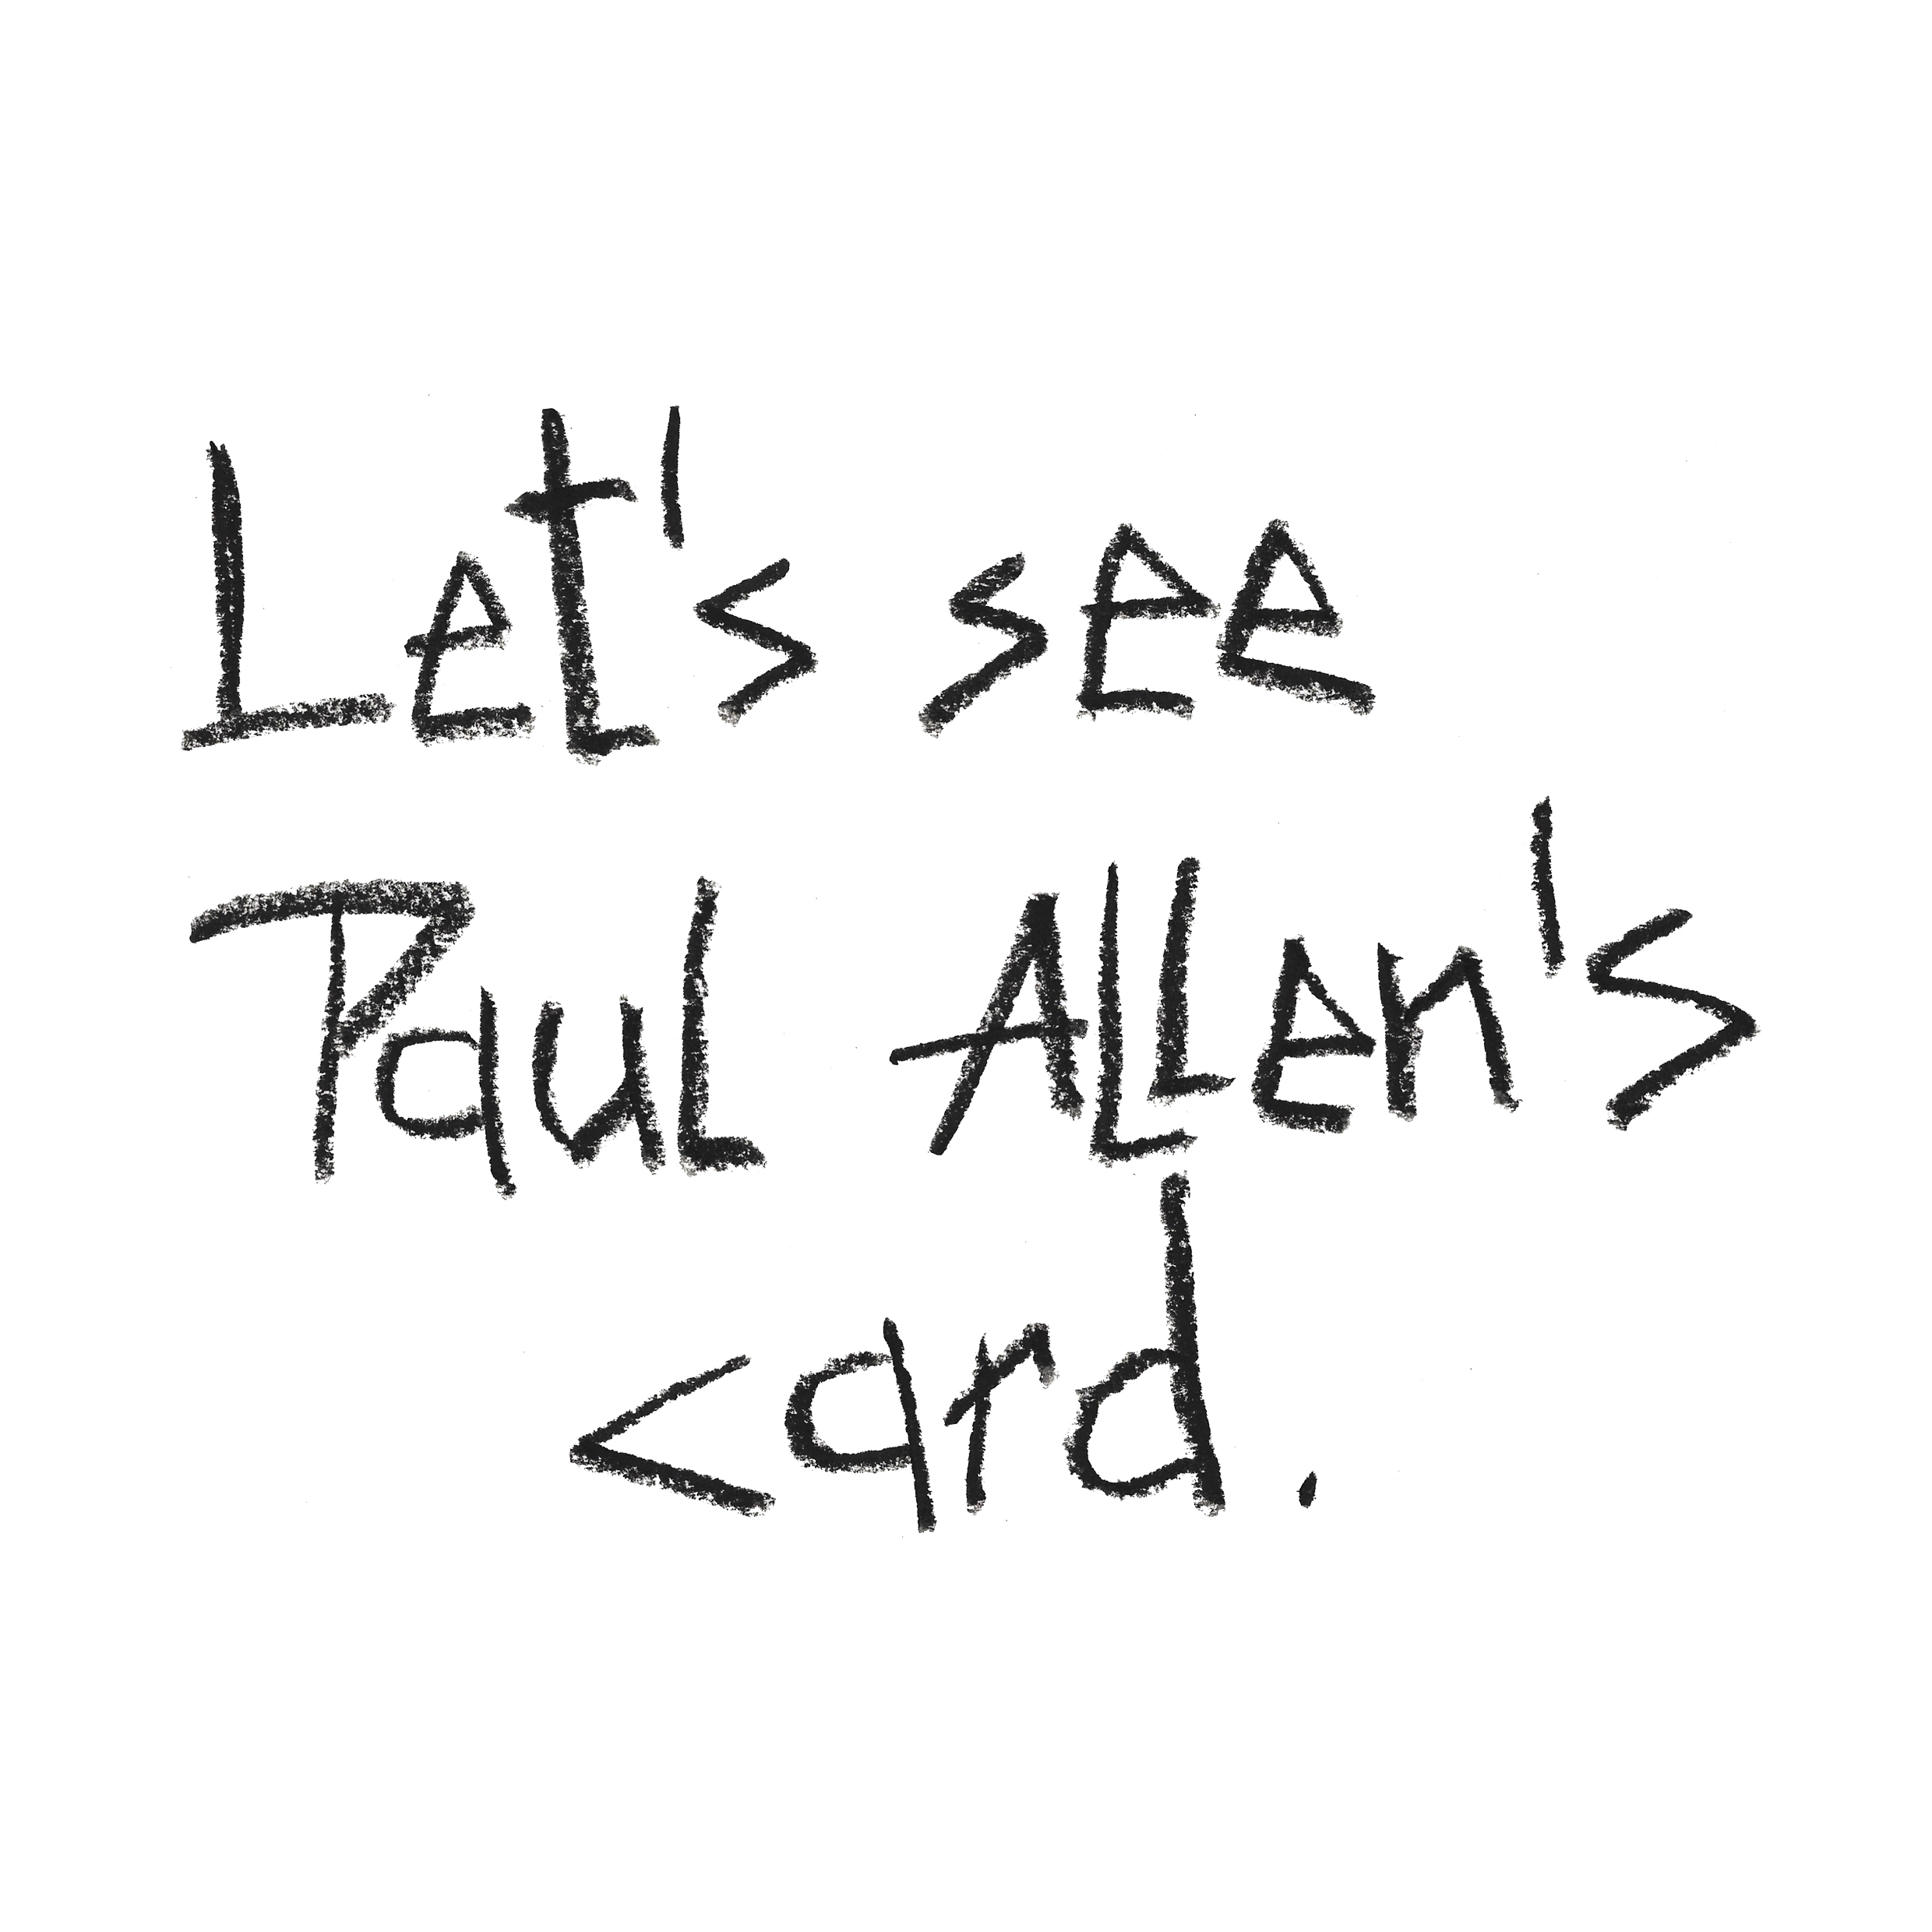 Let’s see Paul Allen’s card.